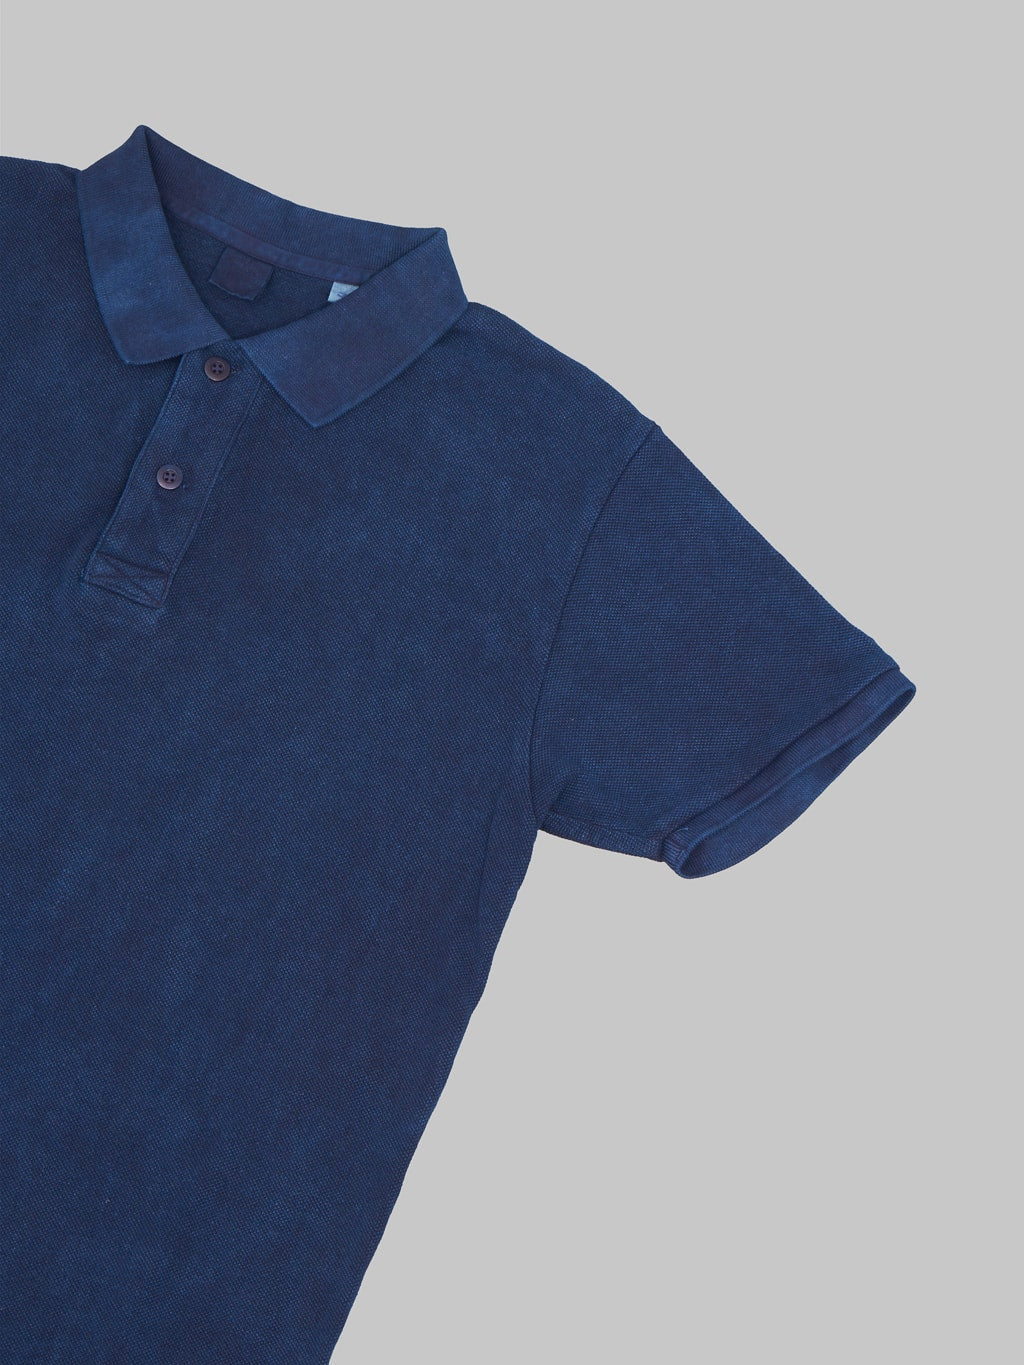 ues polo shirt indigo sleeve detail